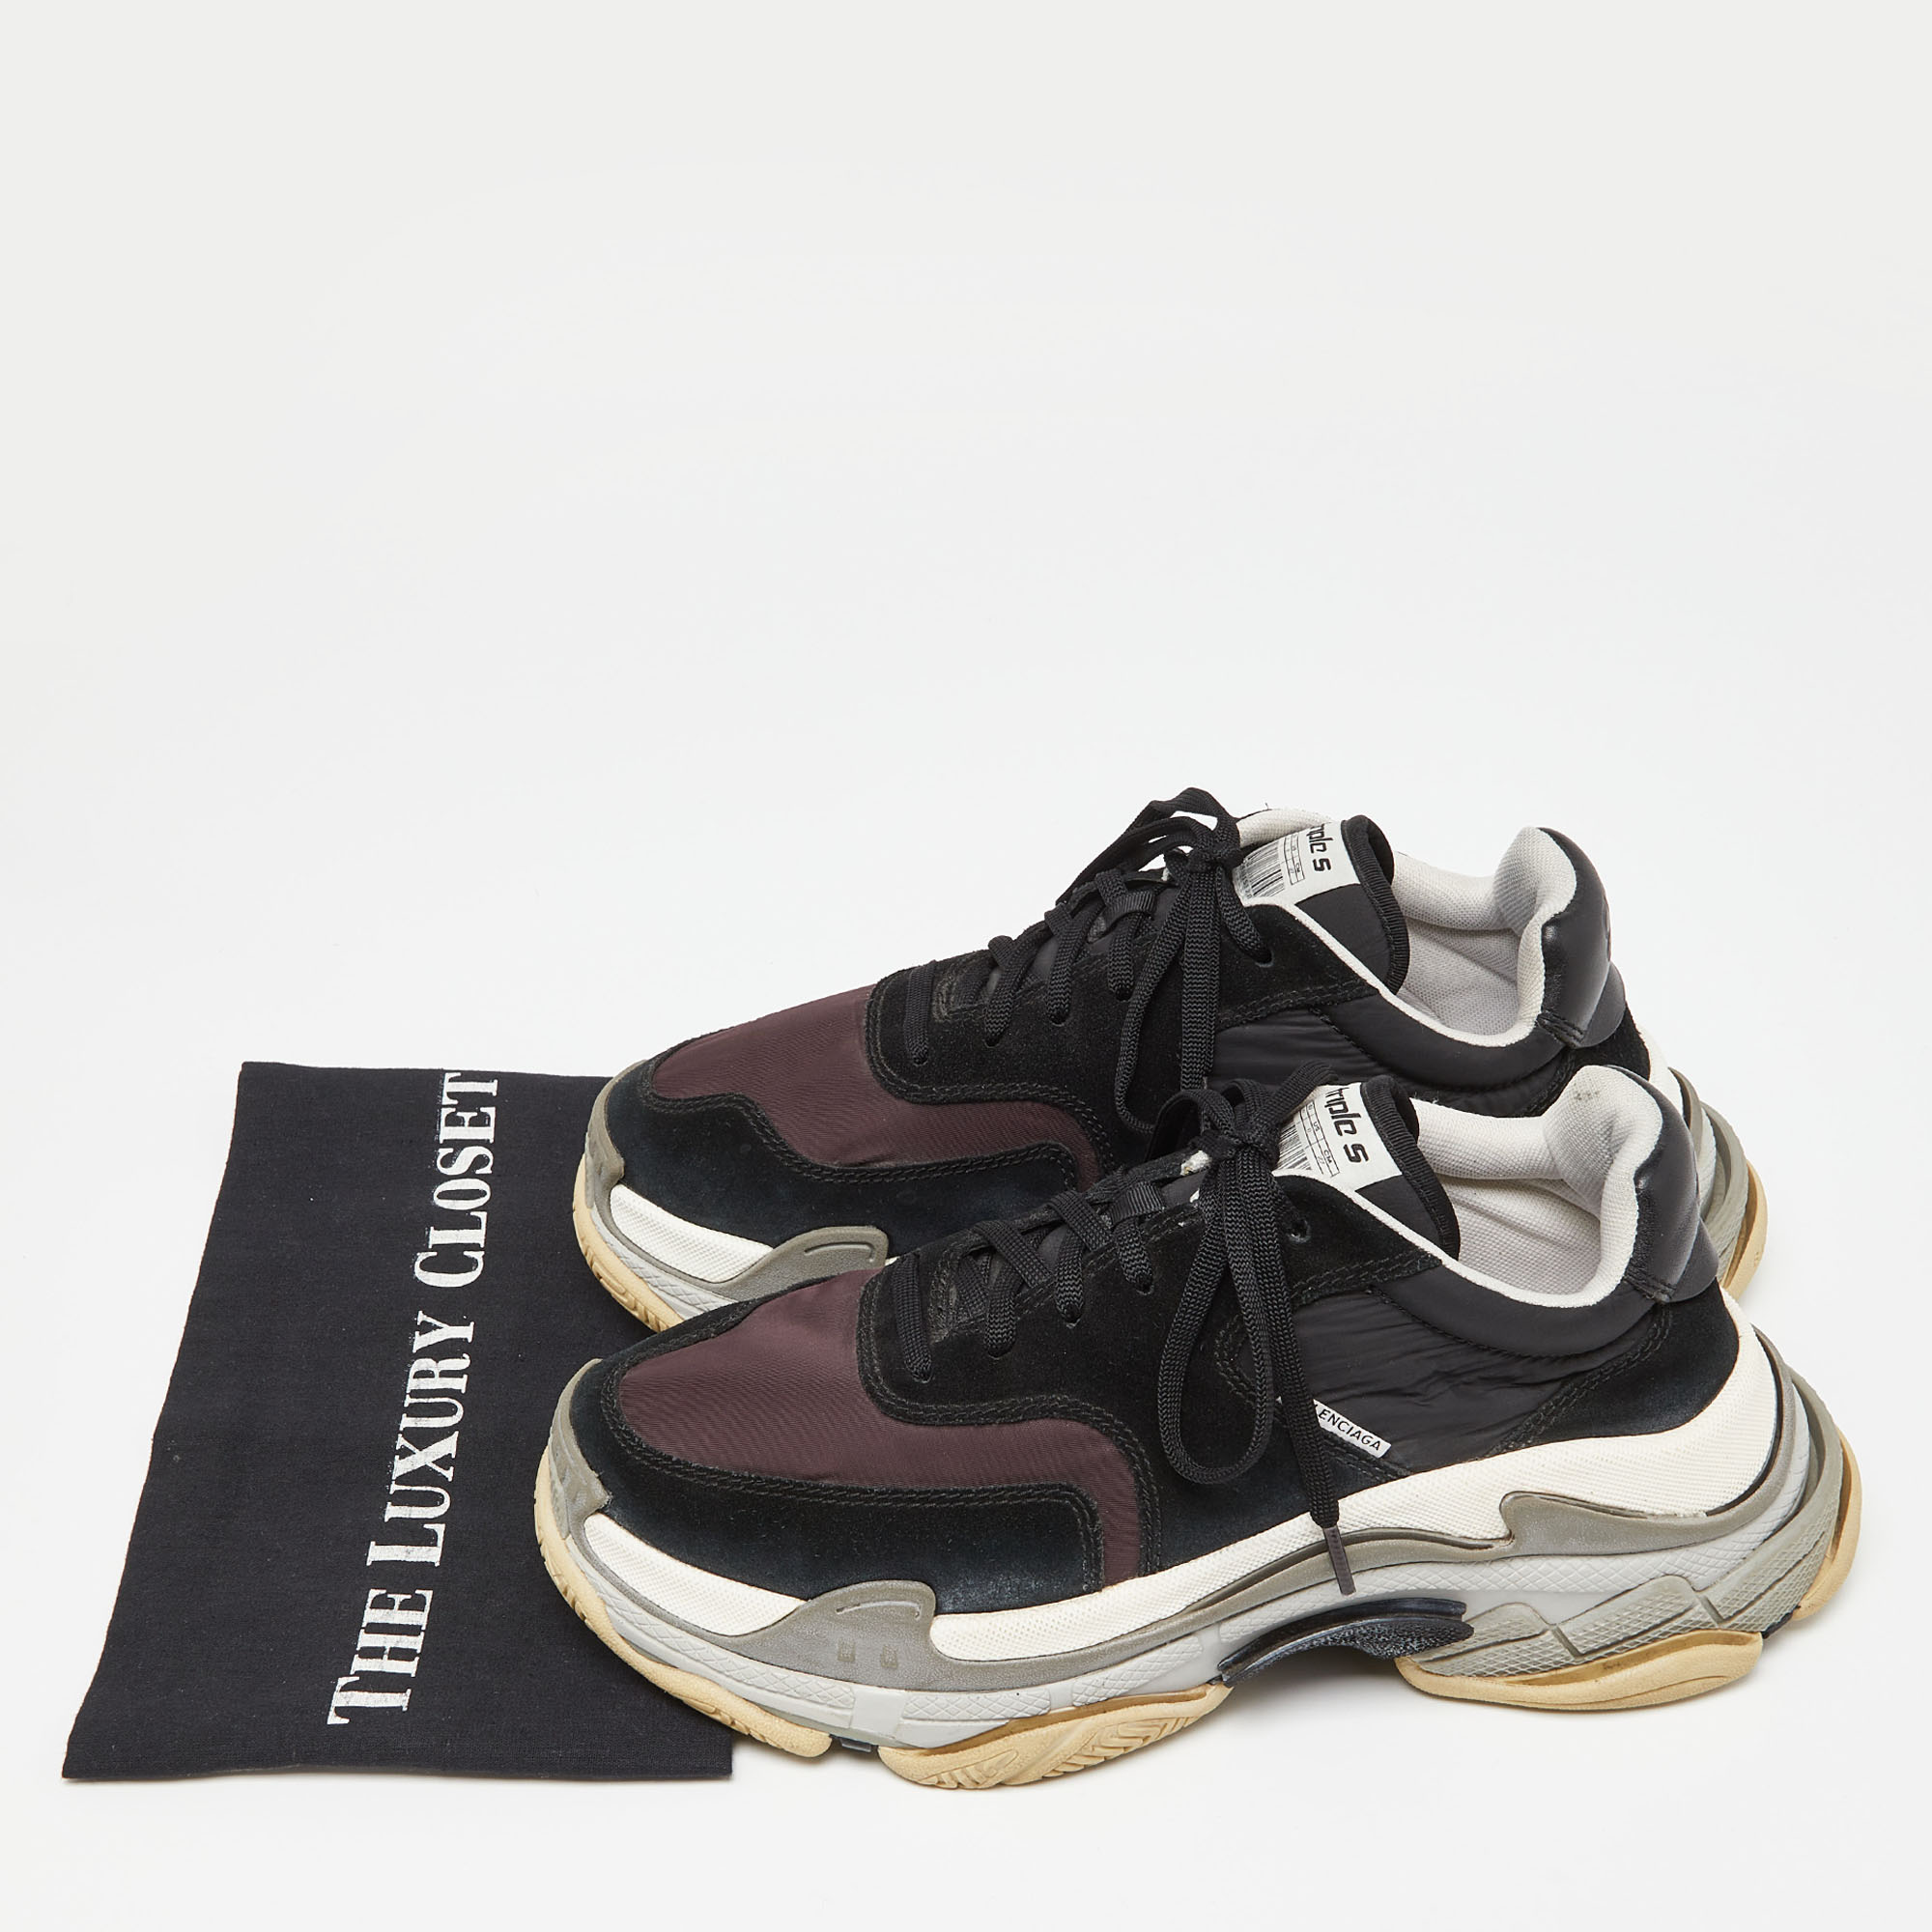 Balenciaga Black/Burgundy Suede And Nylon Triple S Sneakers Size 41